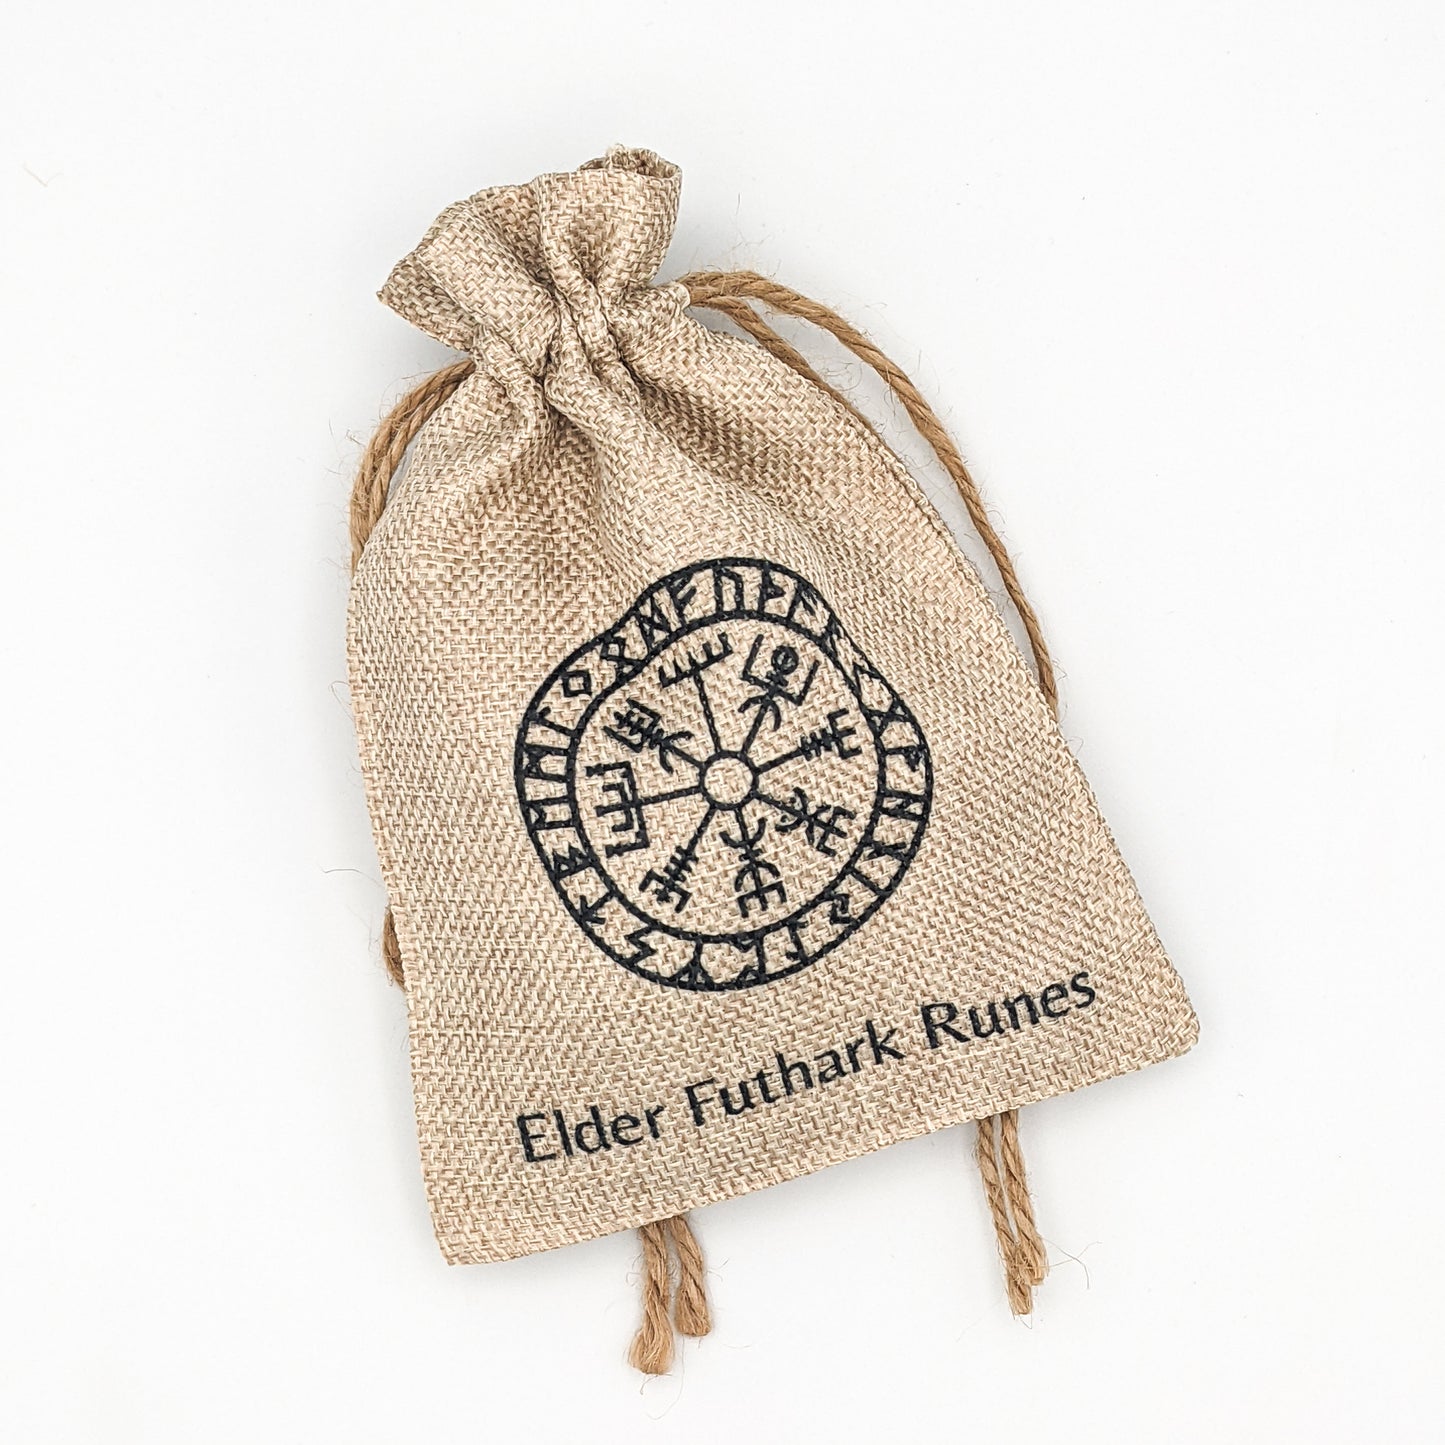 Elder Futhark Runes in Ember